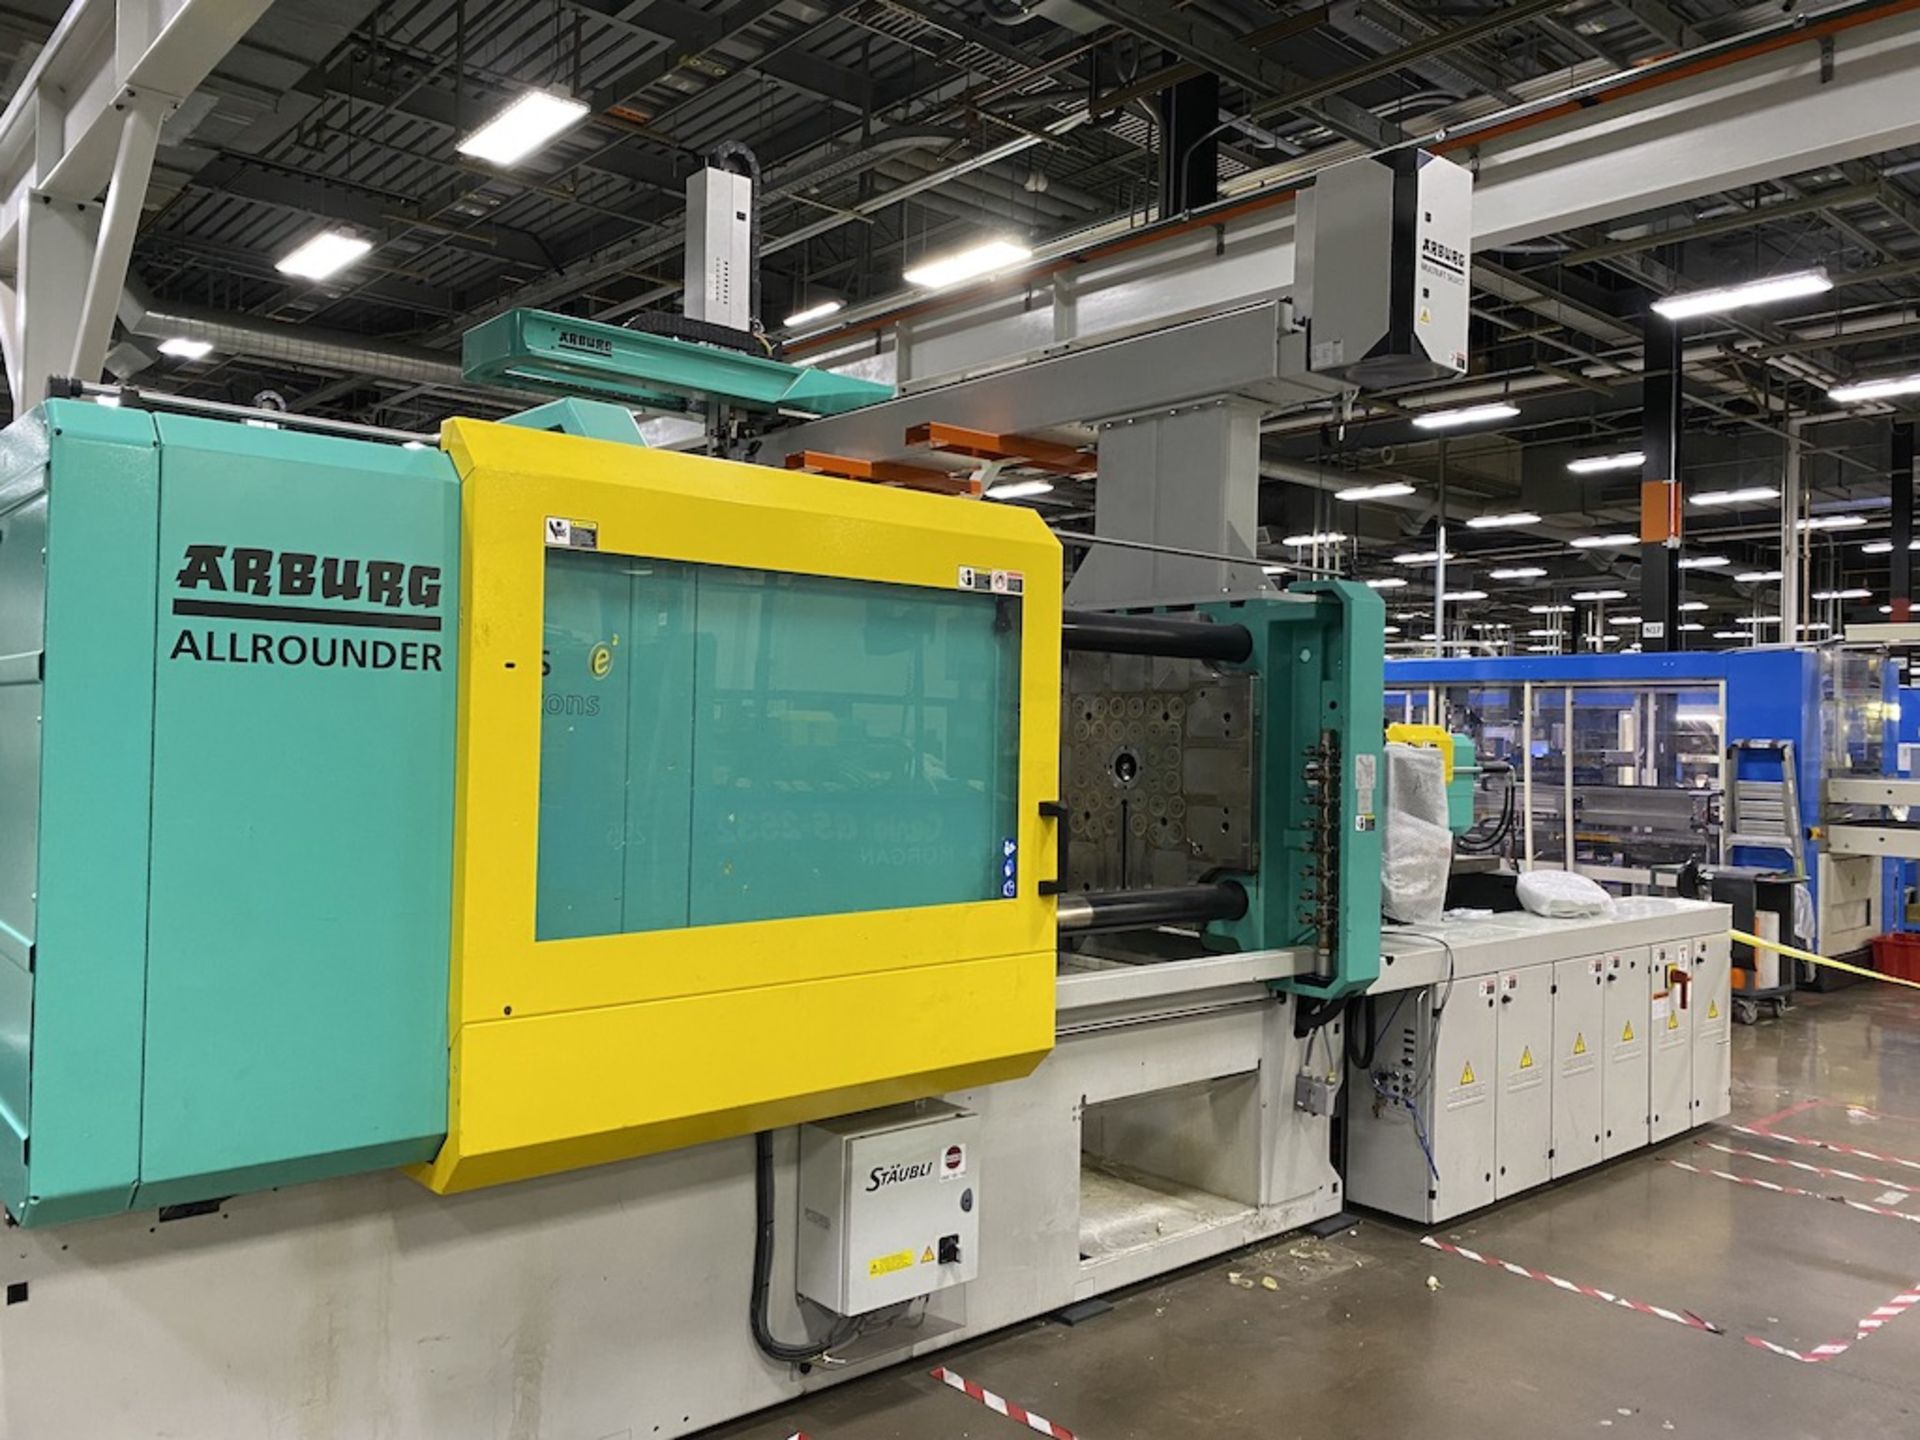 Arburg 320 Metric Ton Injection Molding Press w/Arburg Robot, New in 2015 - Bild 2 aus 10